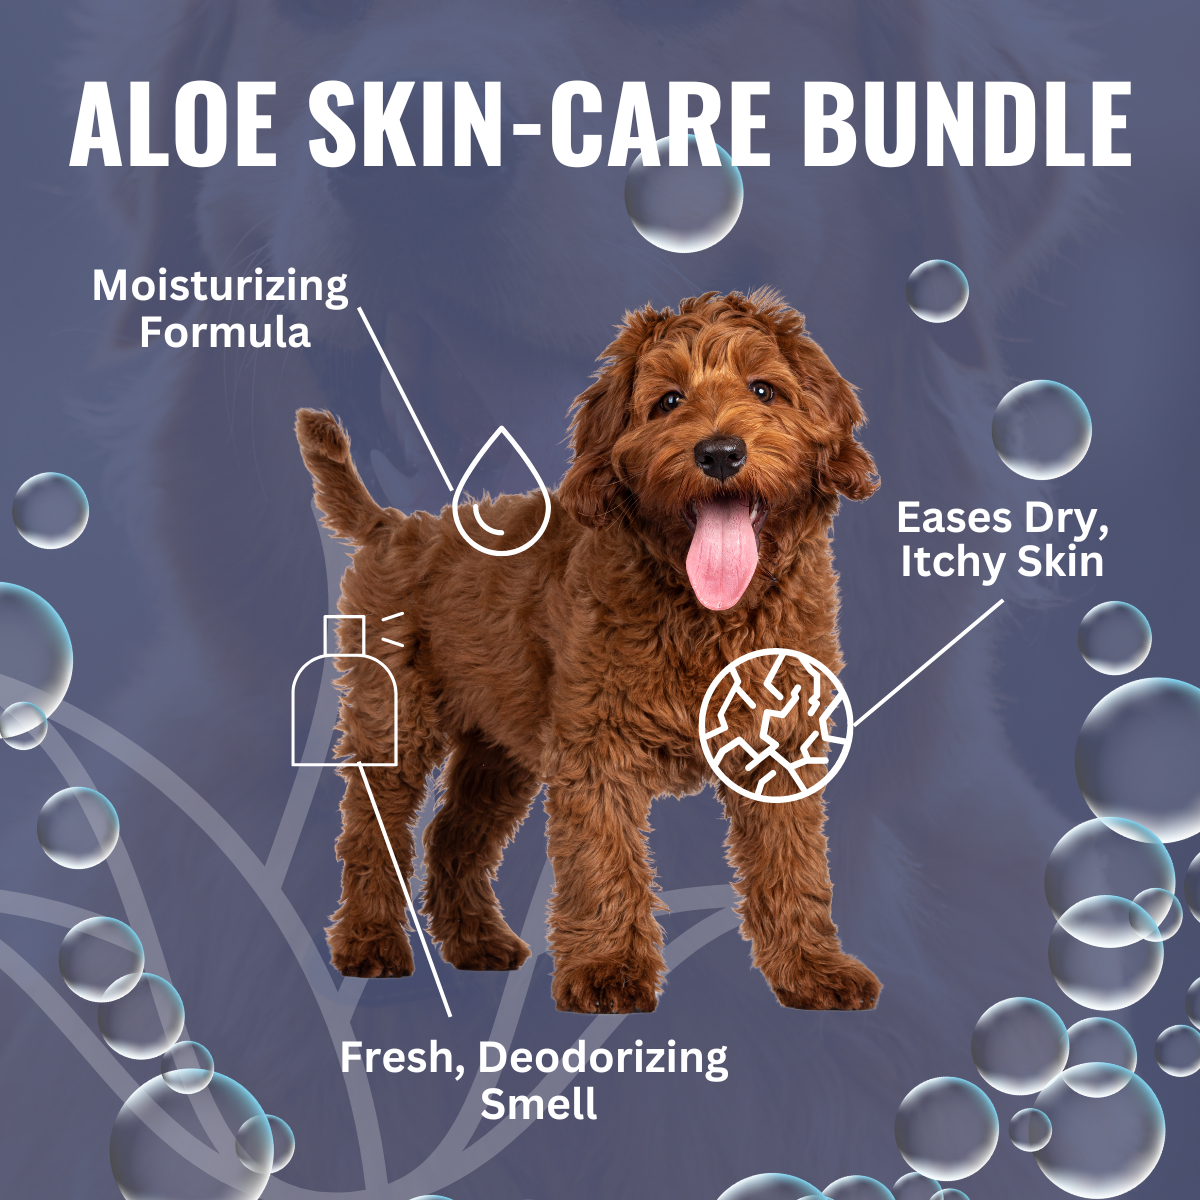 Aloe Skin Care Bundle